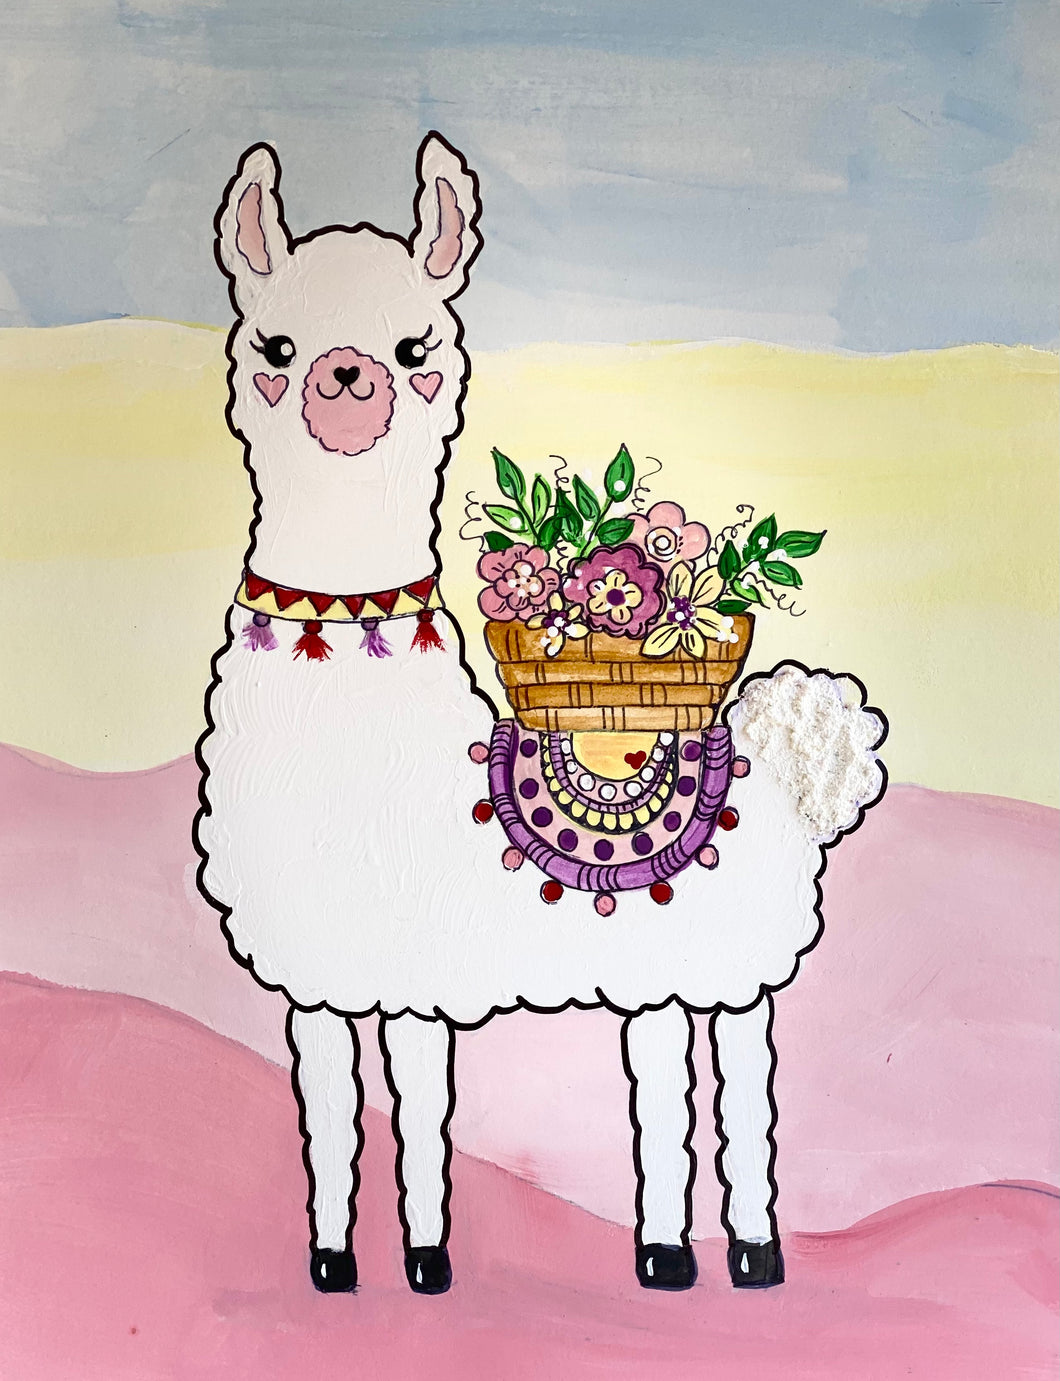 Have a Llama paint party! Ritabarakatshop.com